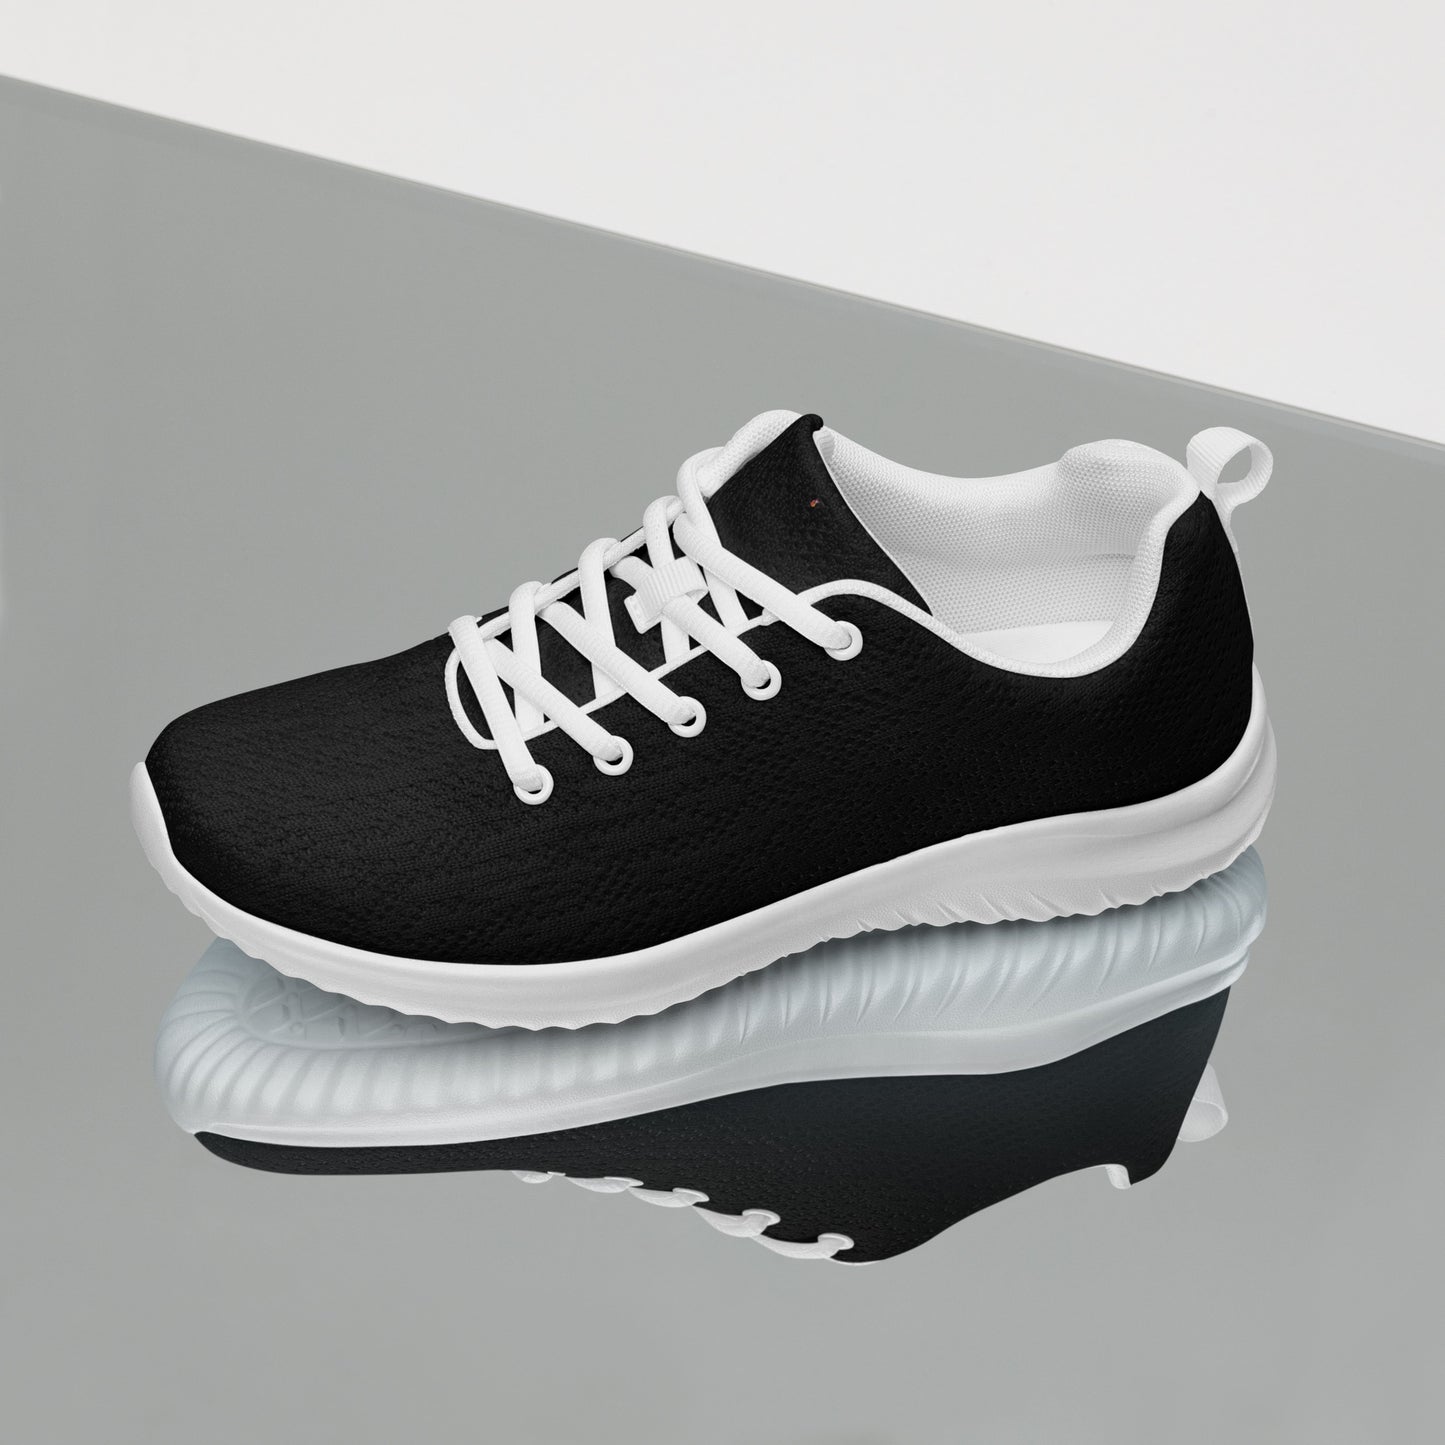 Snooty Fox Art Women’s Athletic Shoes - Black/White